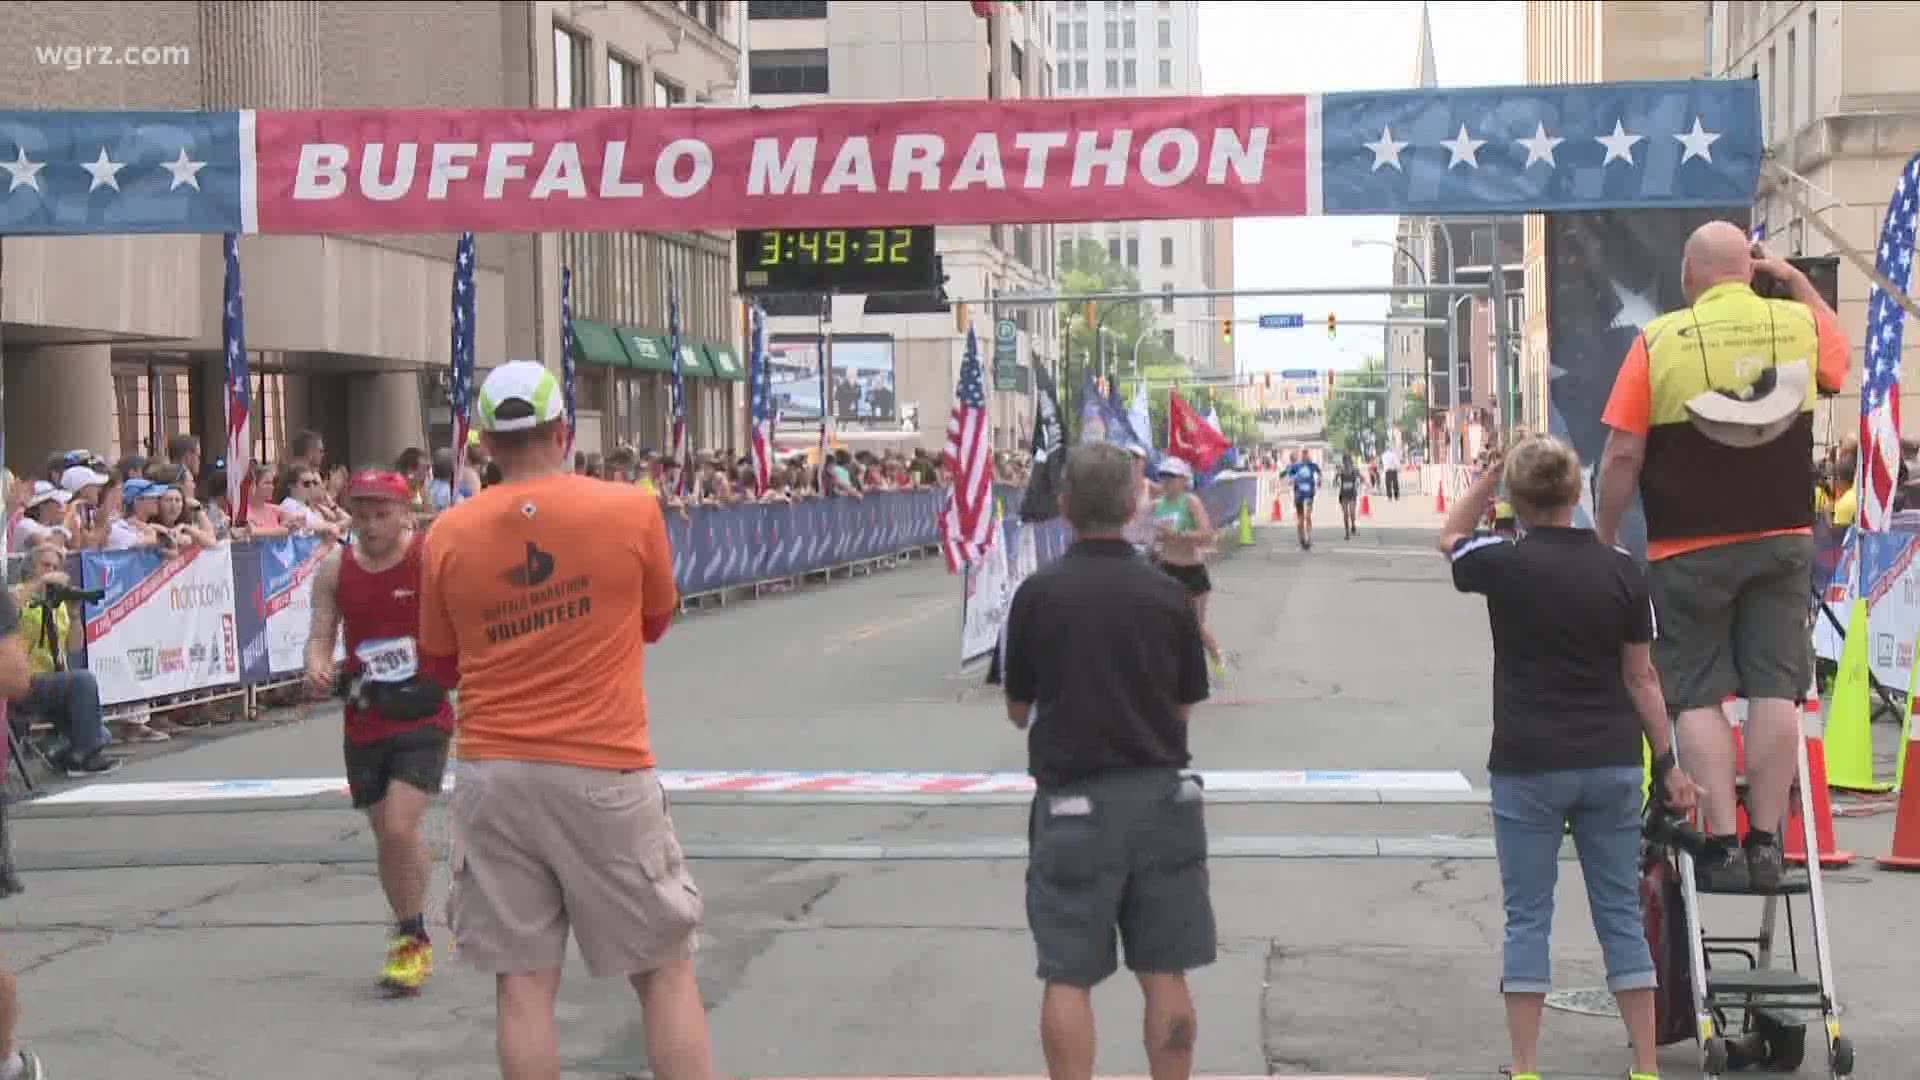 Buffalo Marathon challenge raises 20,000 so far